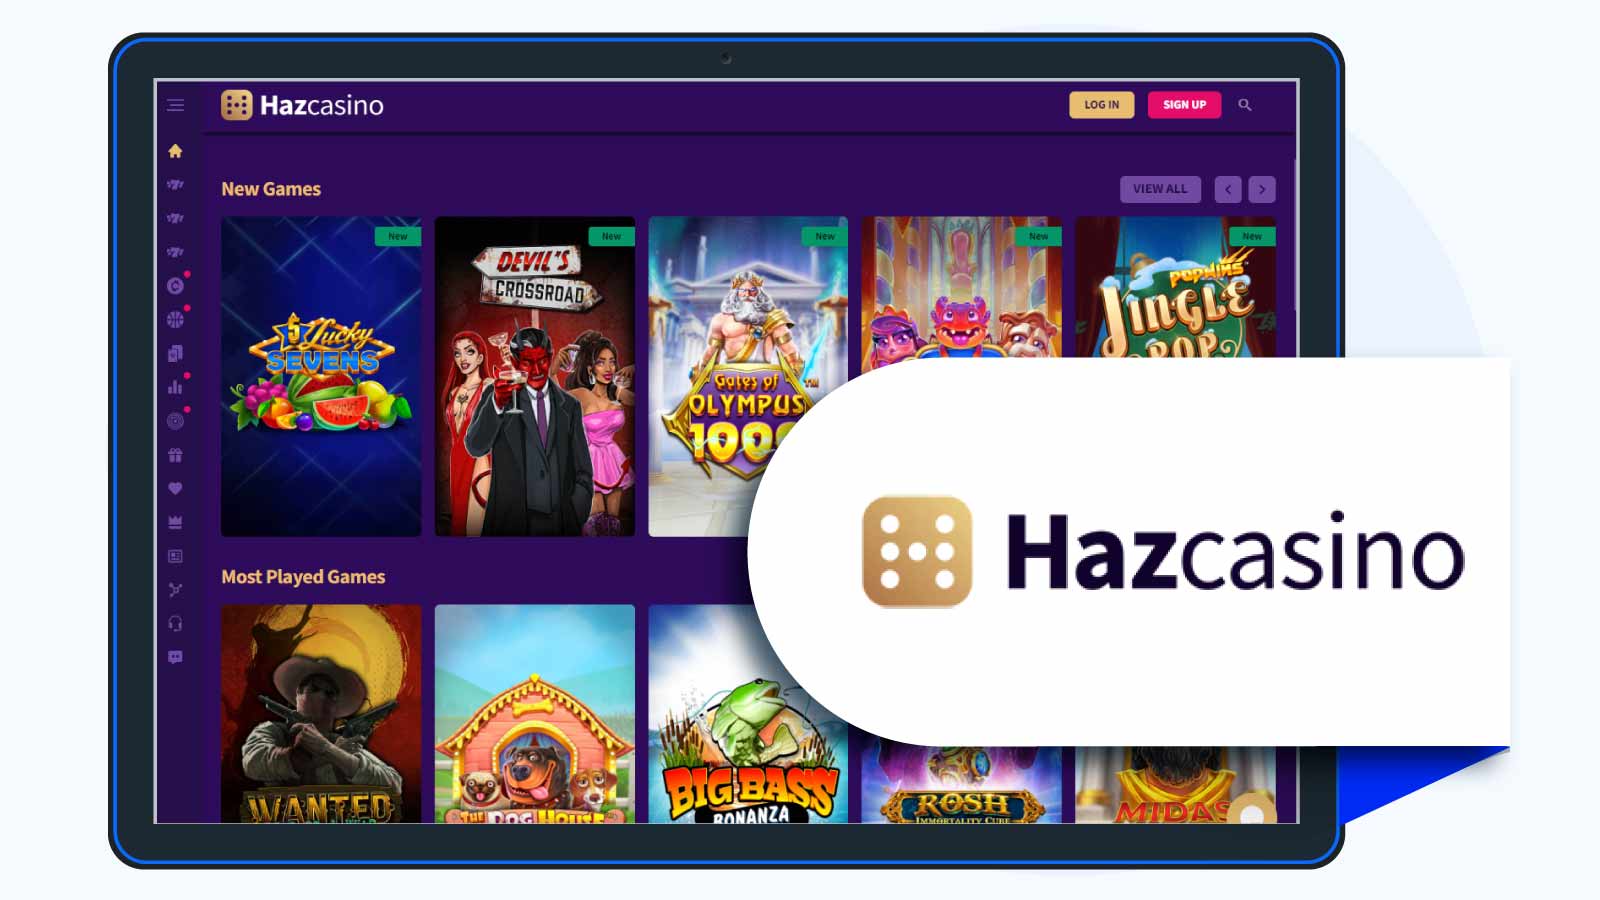 Haz Casino – Best Match Deposit No Wagering Offers